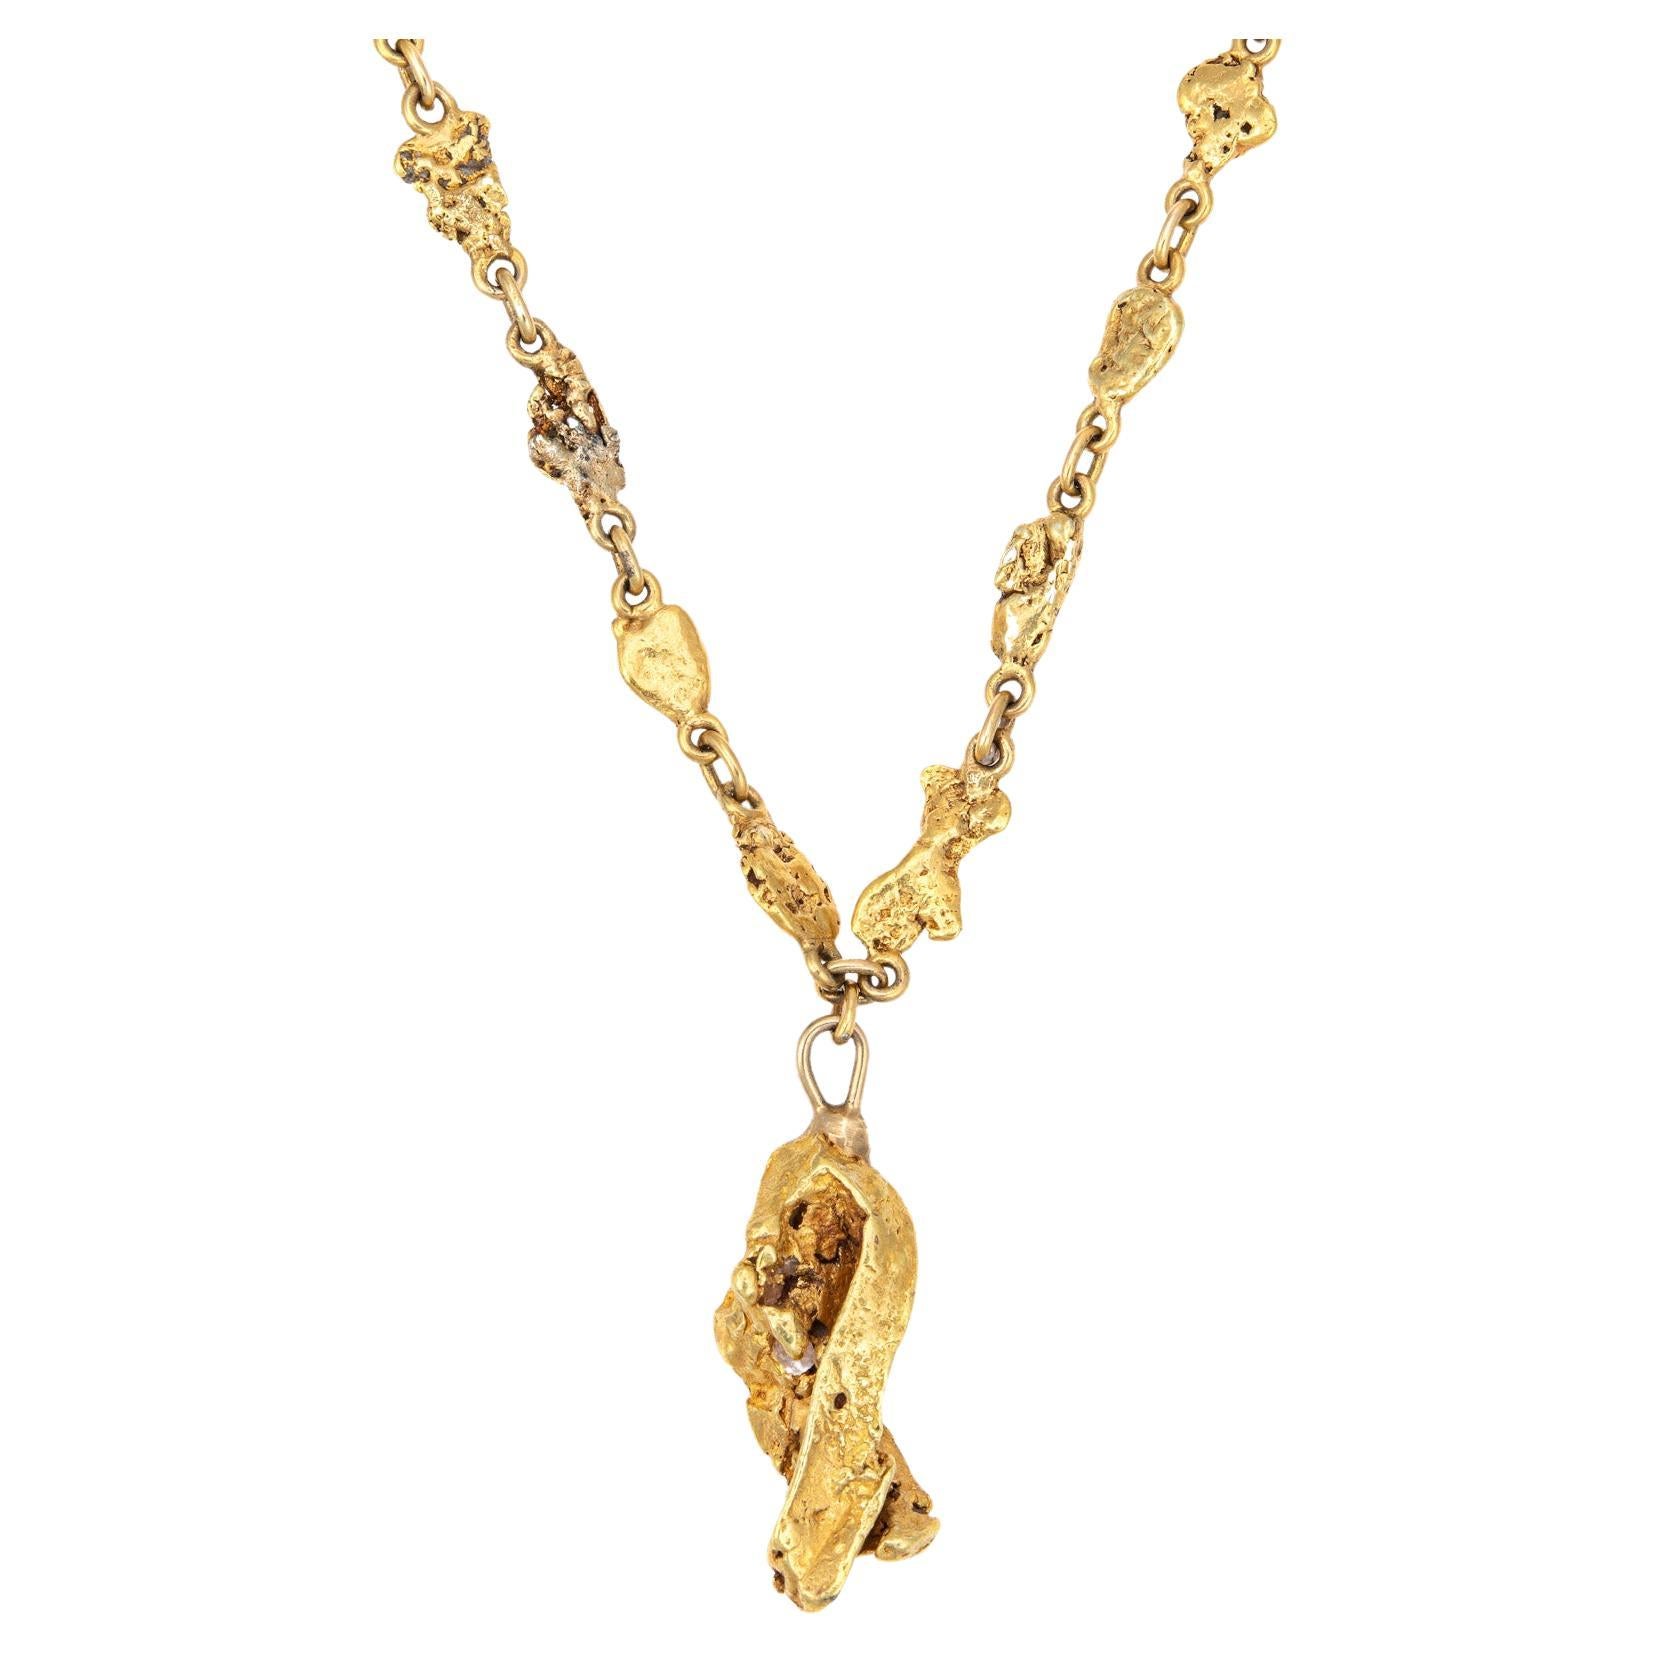 Antique Victorian Gold Nugget Necklace 18" Chain Drop Fine Vintage Jewelry